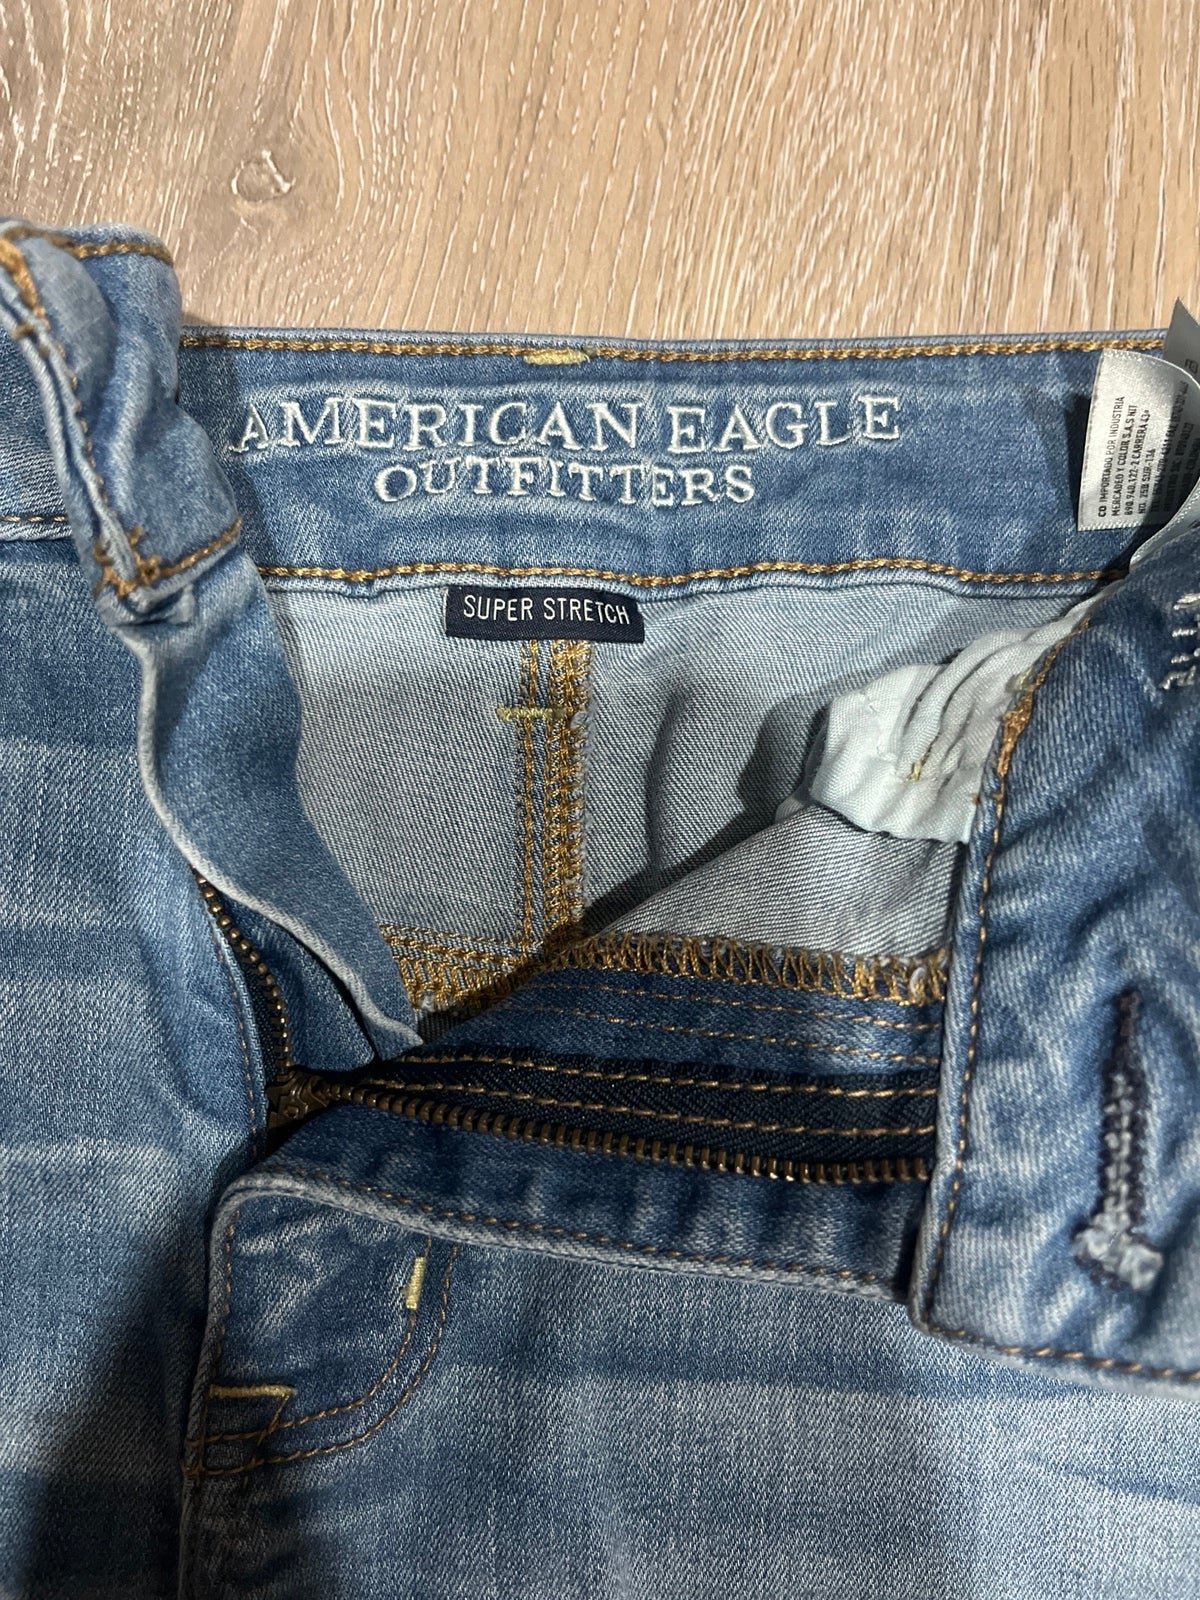 Simple American Eagle Jean Shorts (Light Blue) jRtrcT9NI no tax